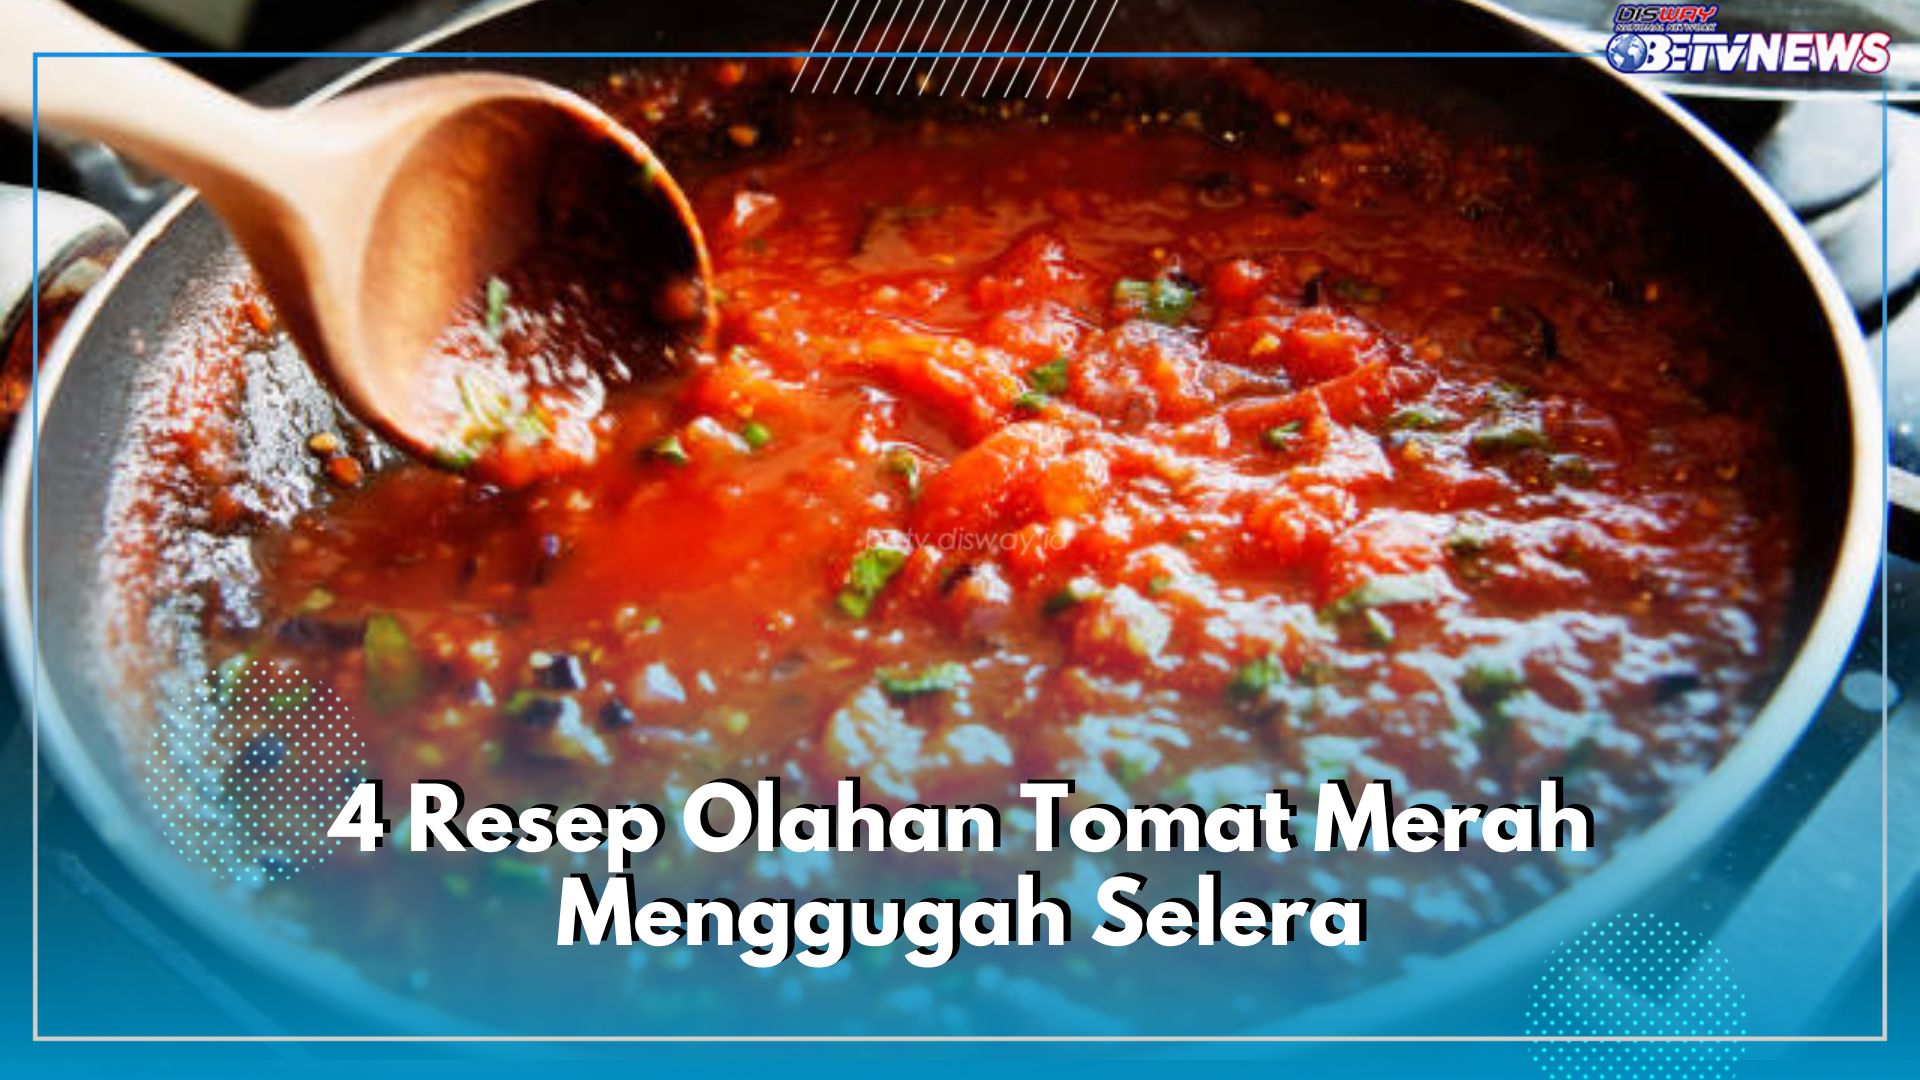 4 Resep Olahan Tomat Merah Menggugah Selera, Ada Pasta hingga Salad Mozzarella, Yuk Coba!